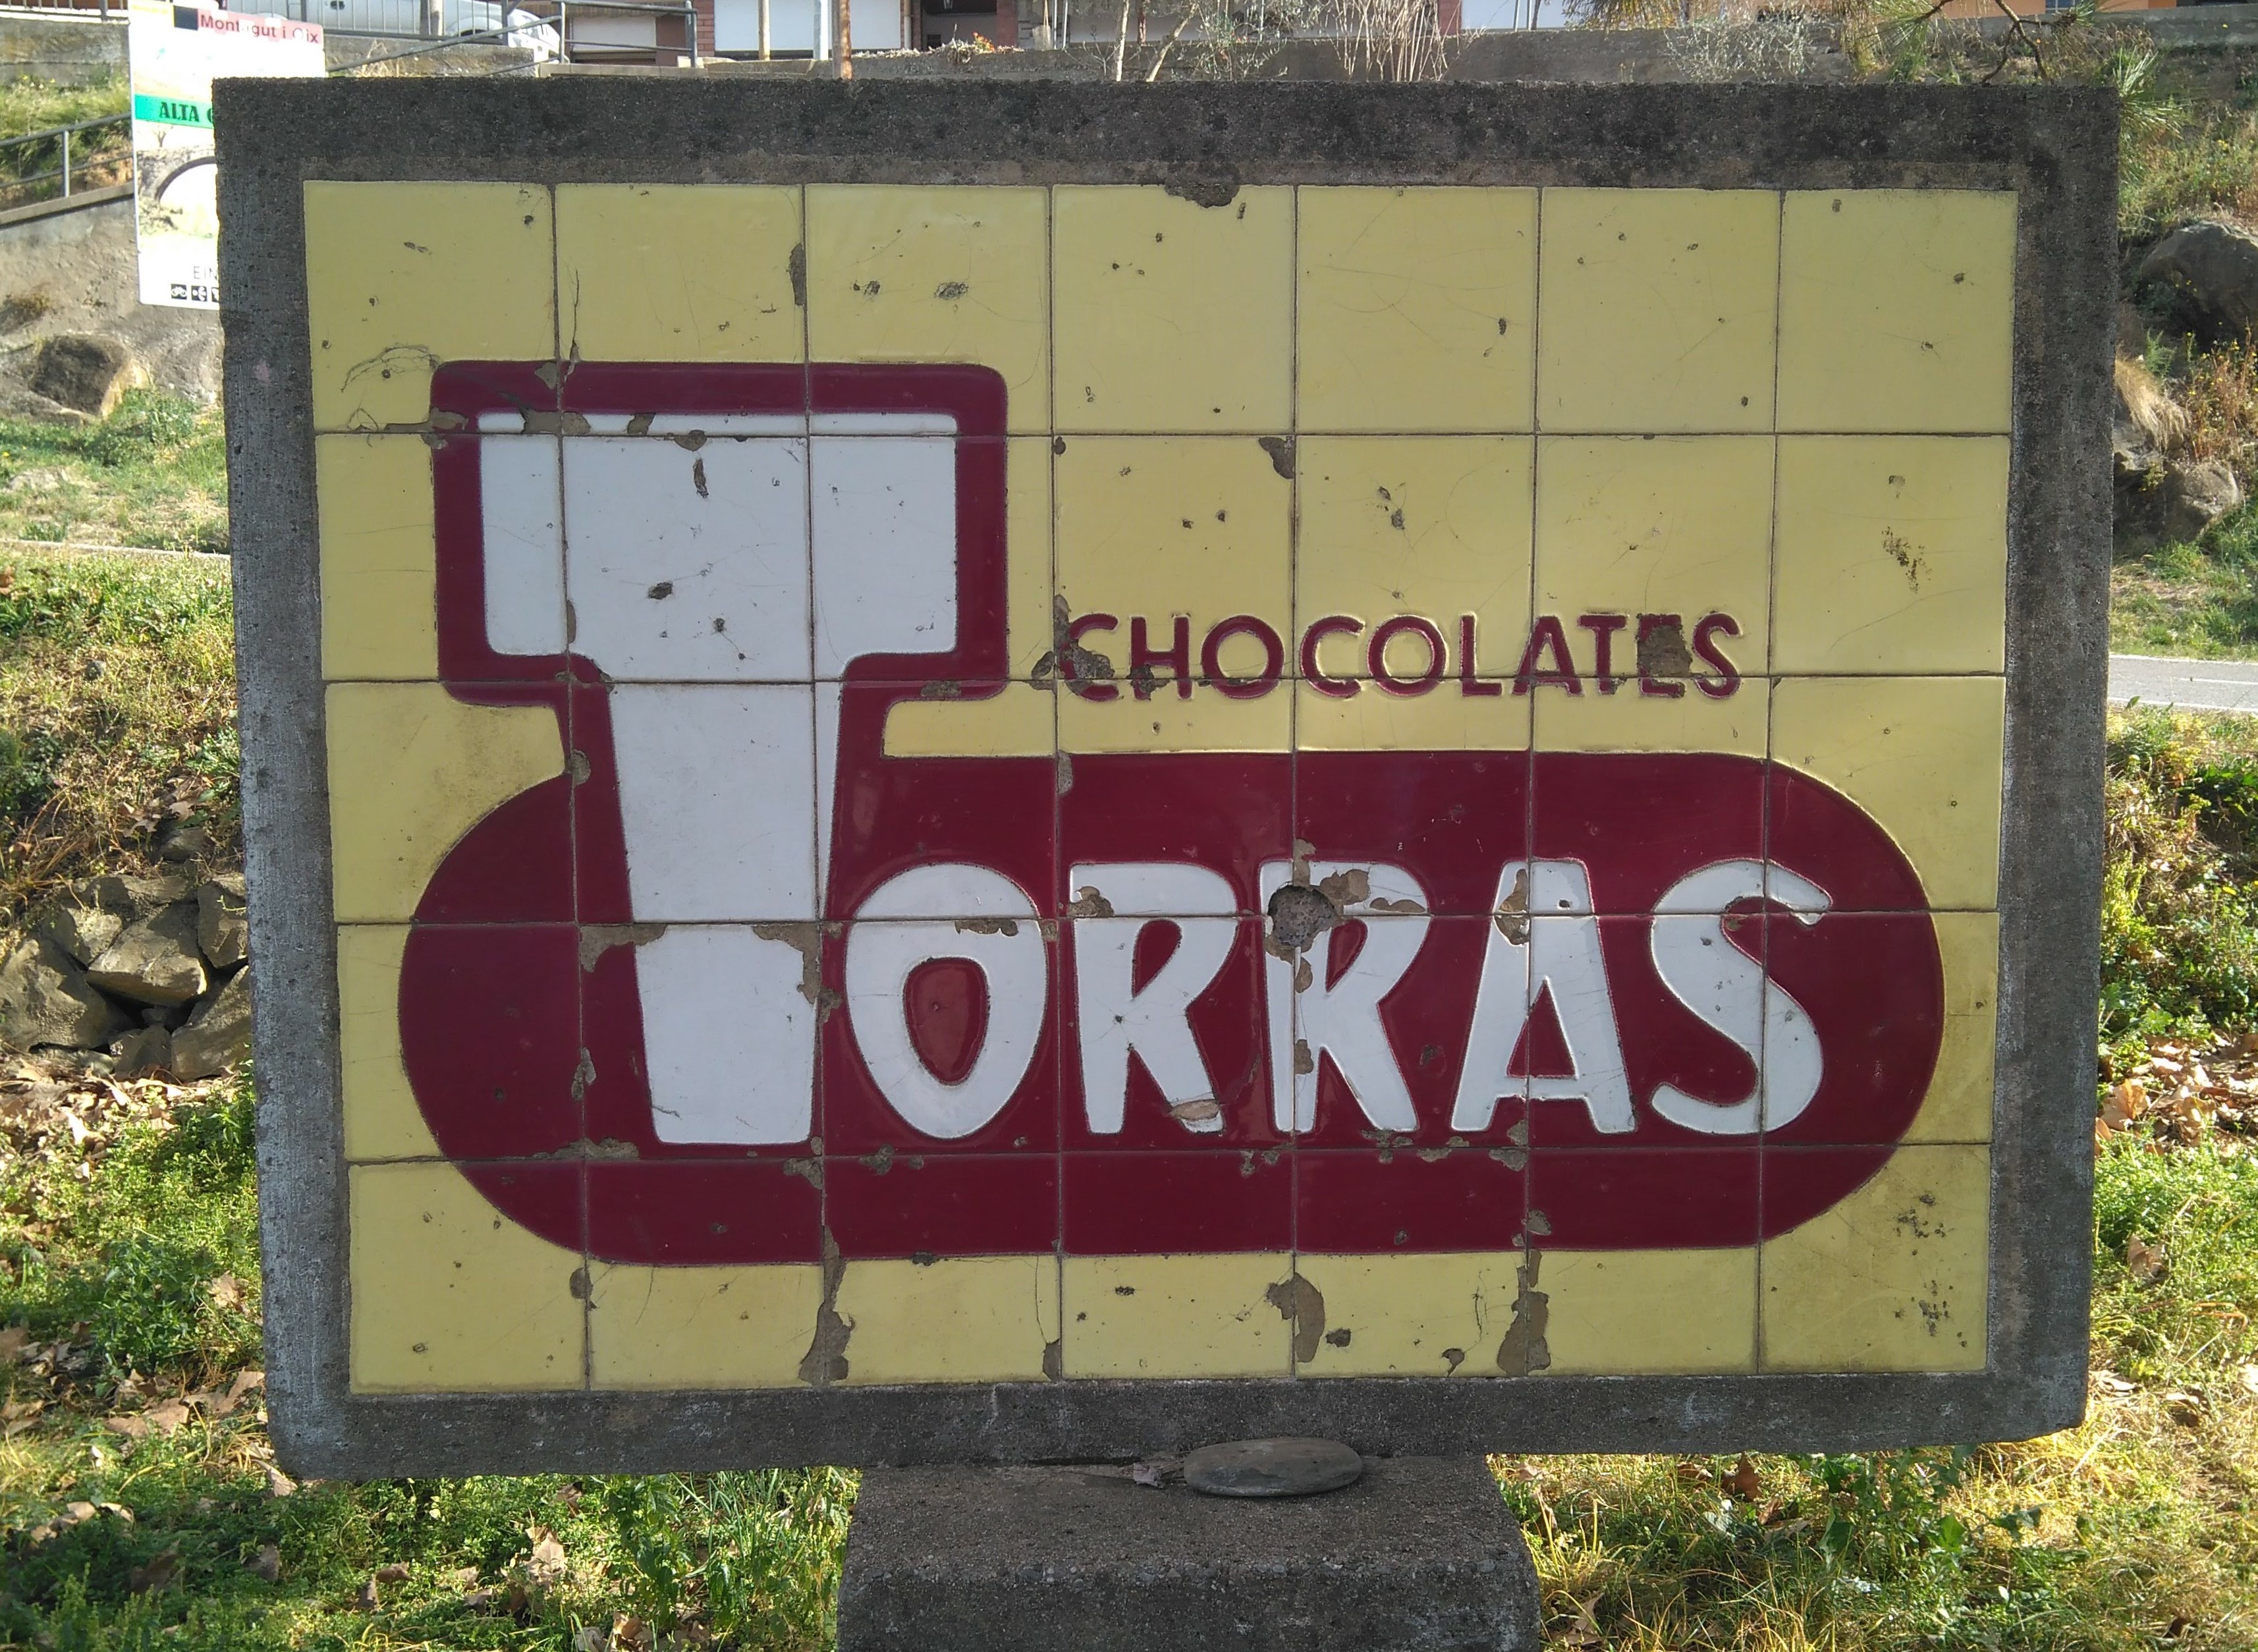 La campanya publicitària de Chocolates Torras>